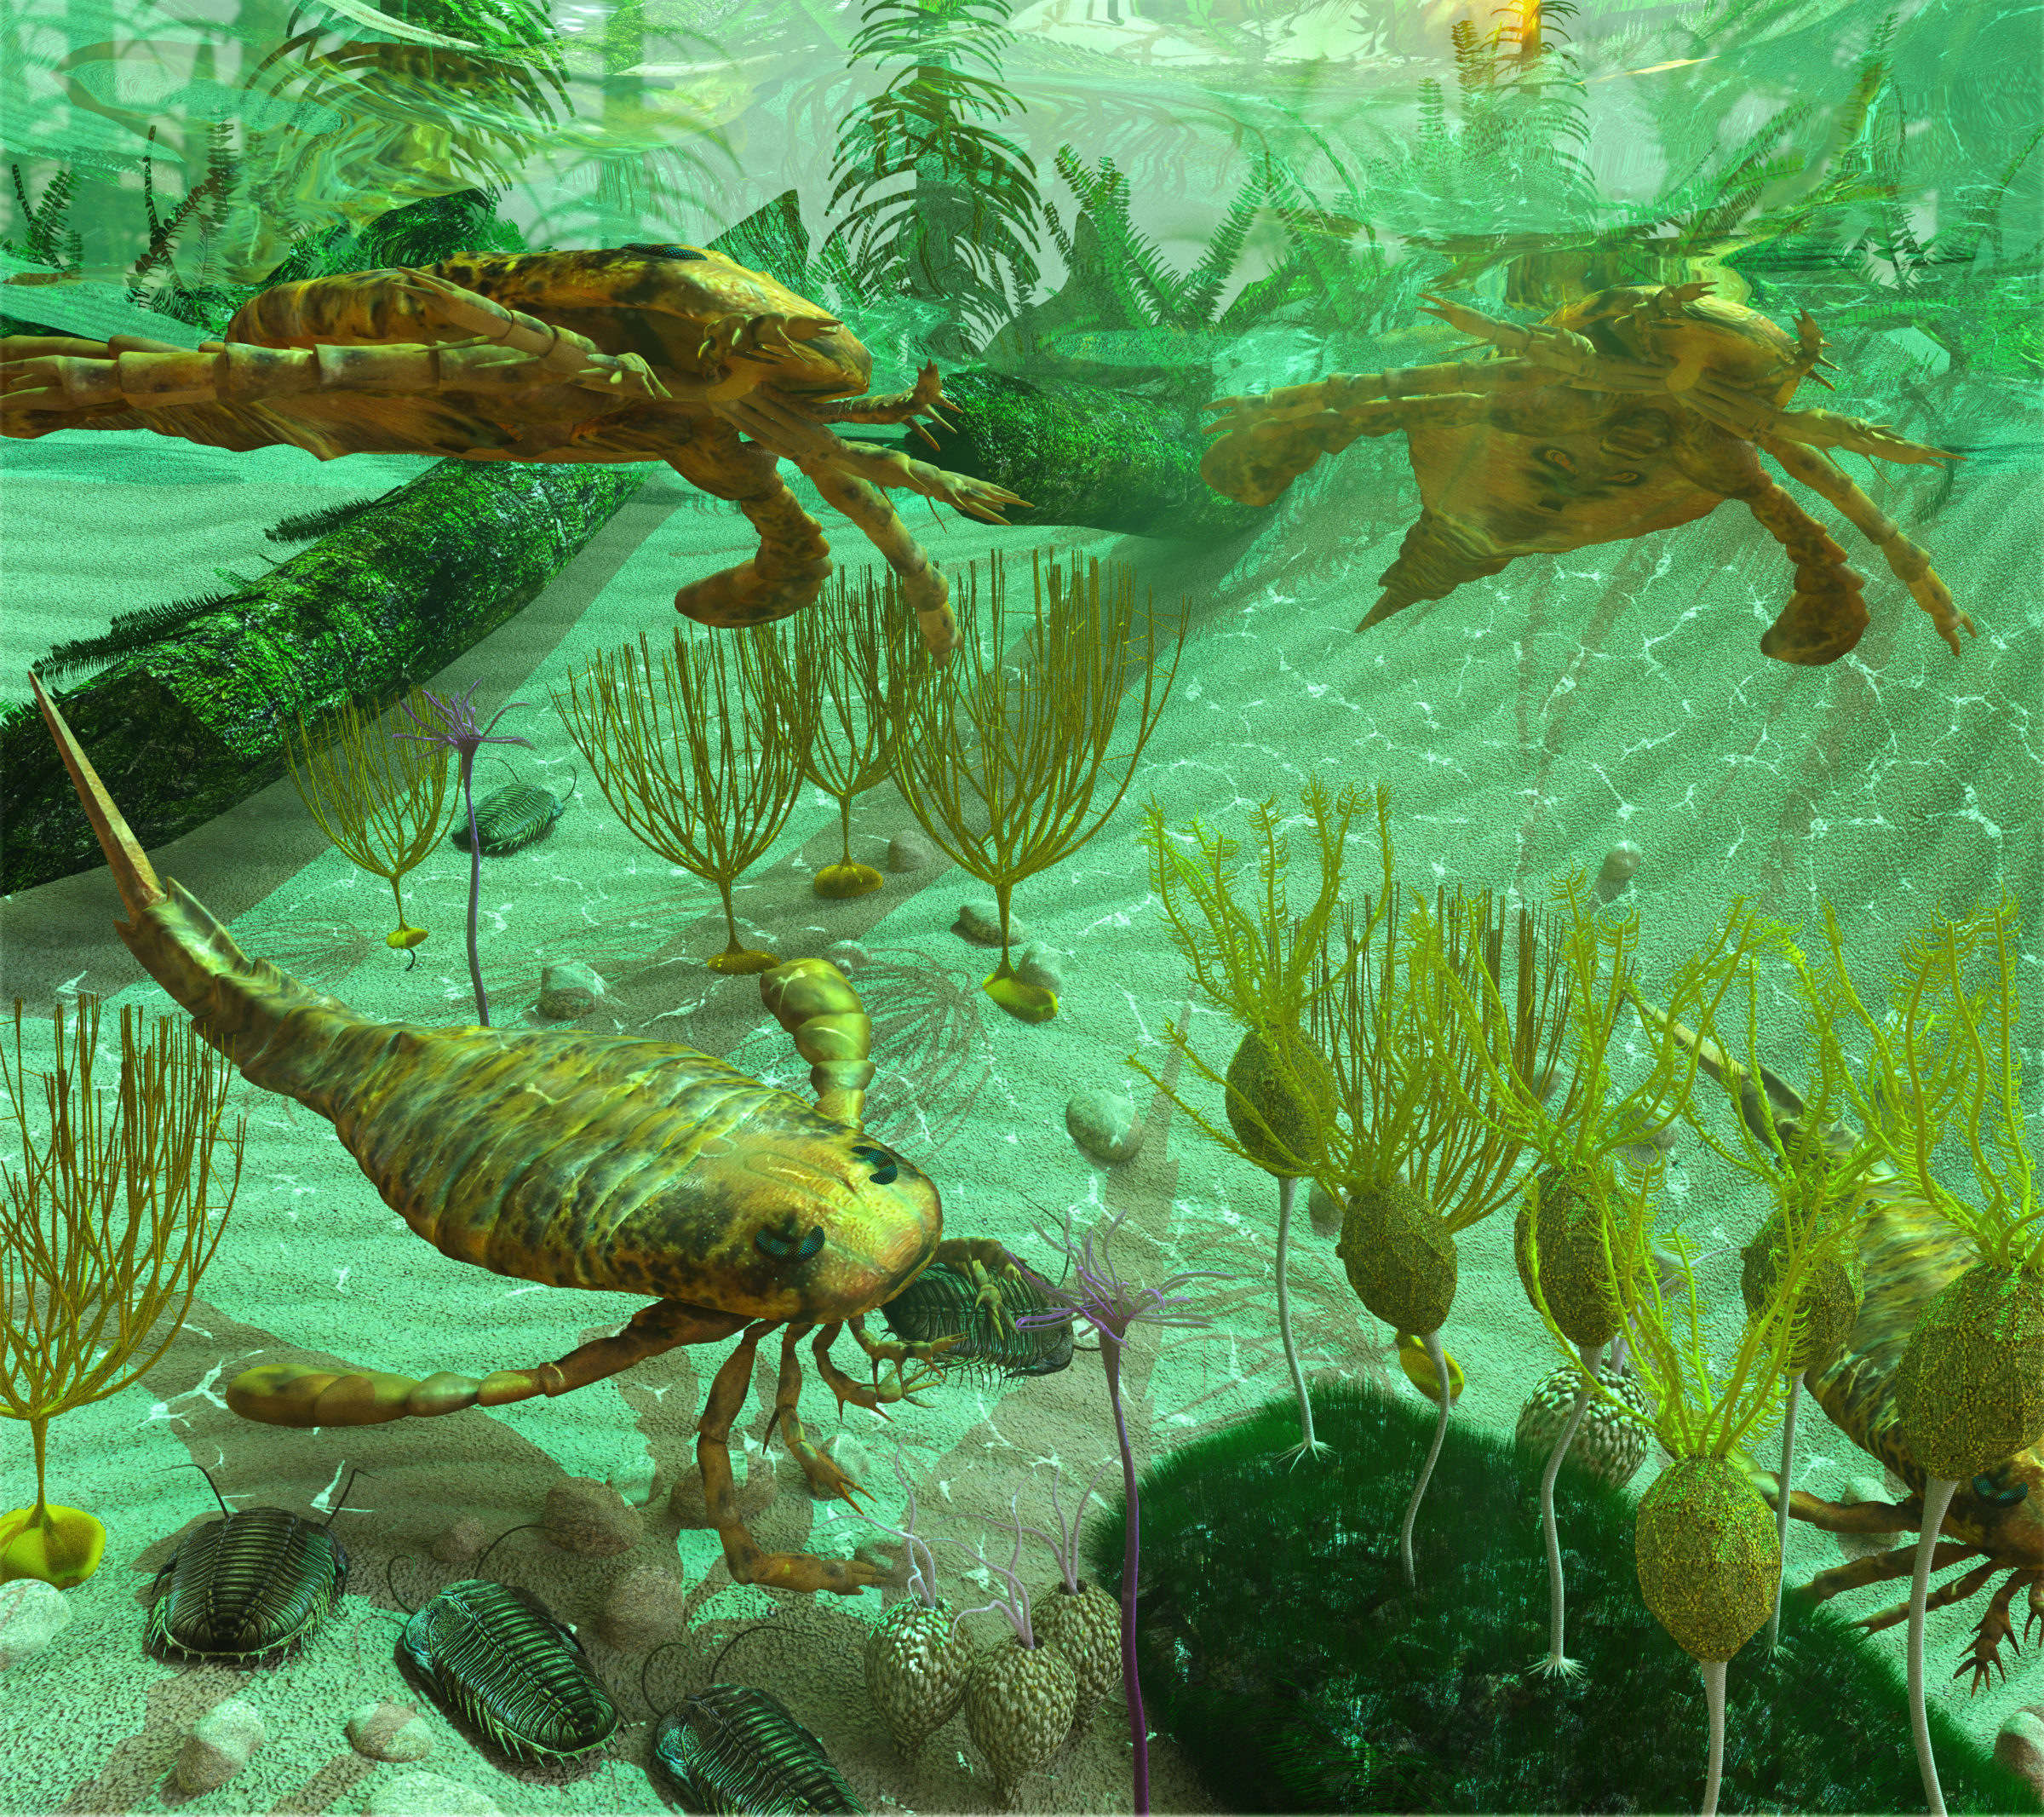 An illustration depicting life in a Devonian Period sea (419 to 358 million years ago). Shown are: Trilobites, Eurypterids, Blastoids, Crinoids, Caryocrinites and Graptolite Dictyonema.